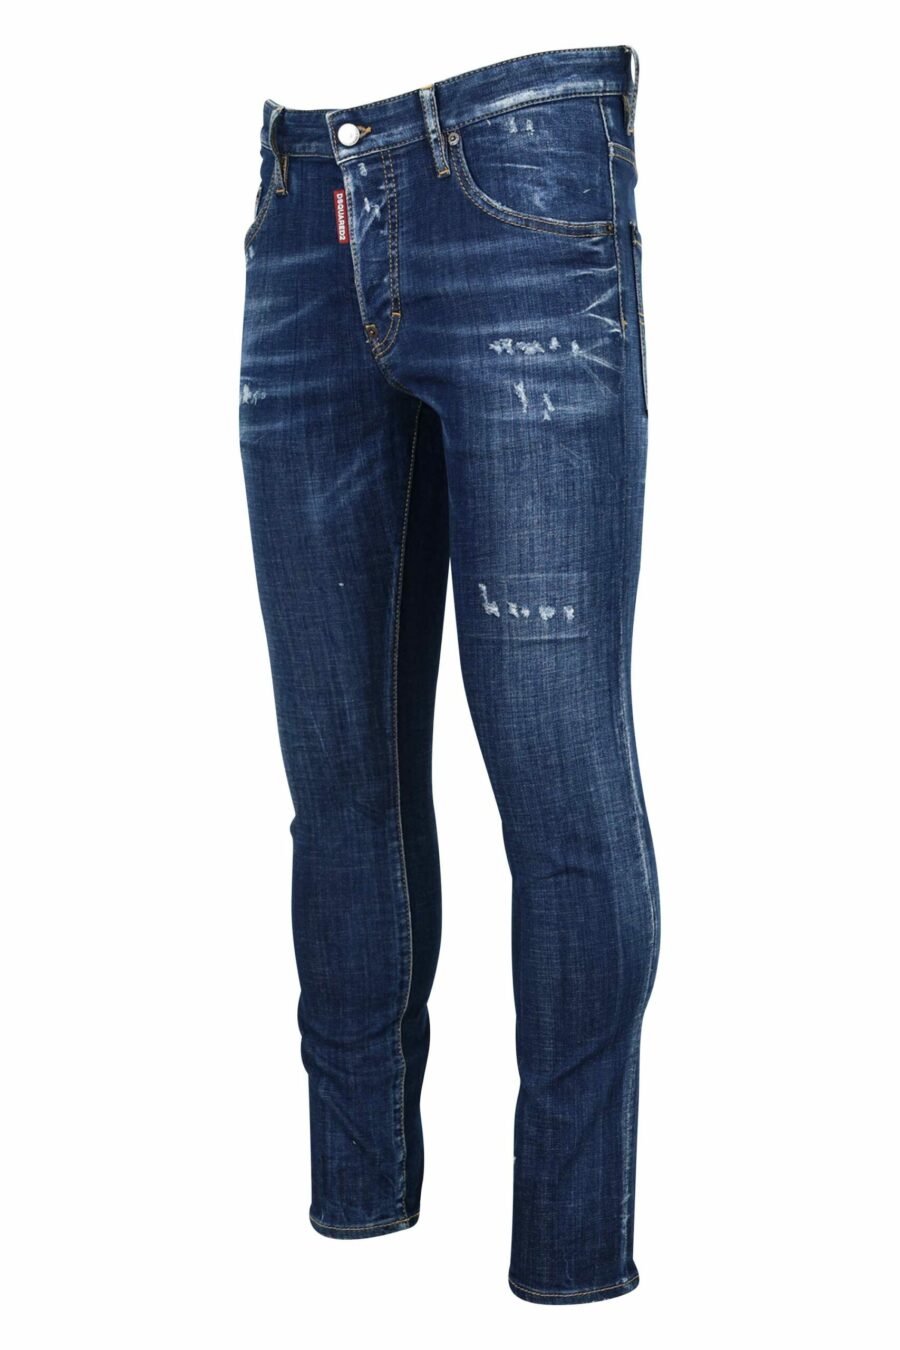 Semi-worn blue "skater jean" jeans - 8054148101503 1 scaled